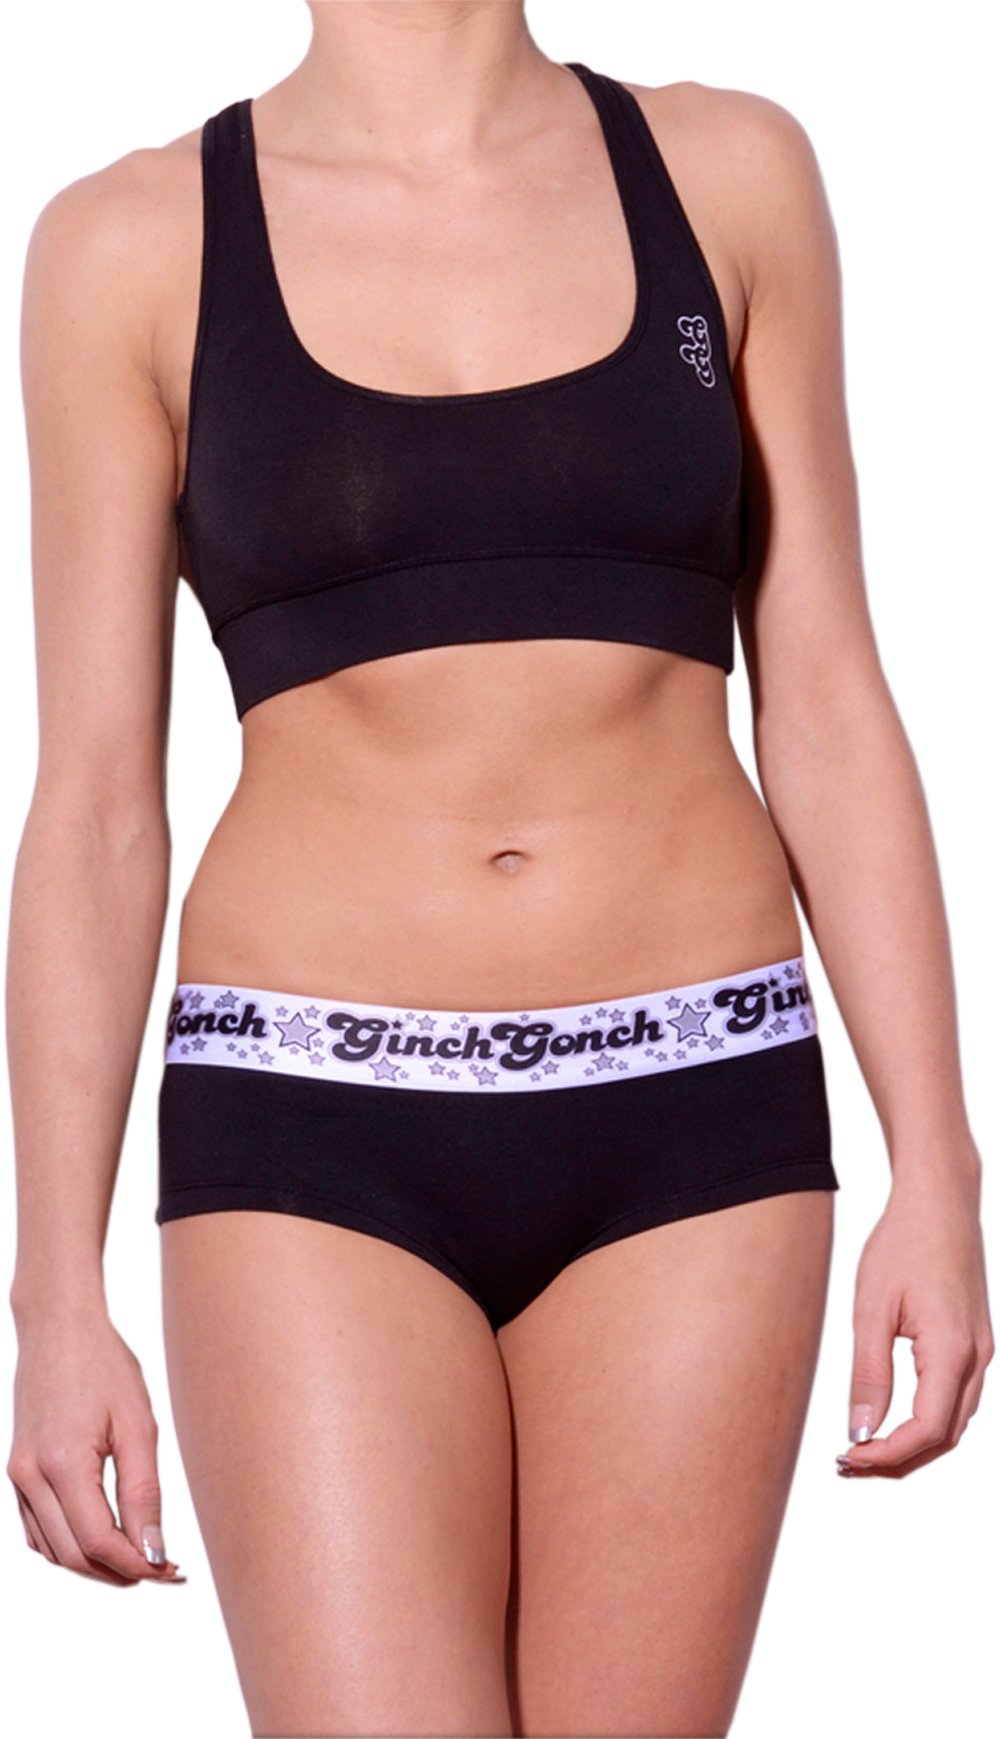 Ginch Gonch Black Magic Brief - Women's Underwear black boy cut gogo with white printed waistband front matching black sports bra with gg logo left side